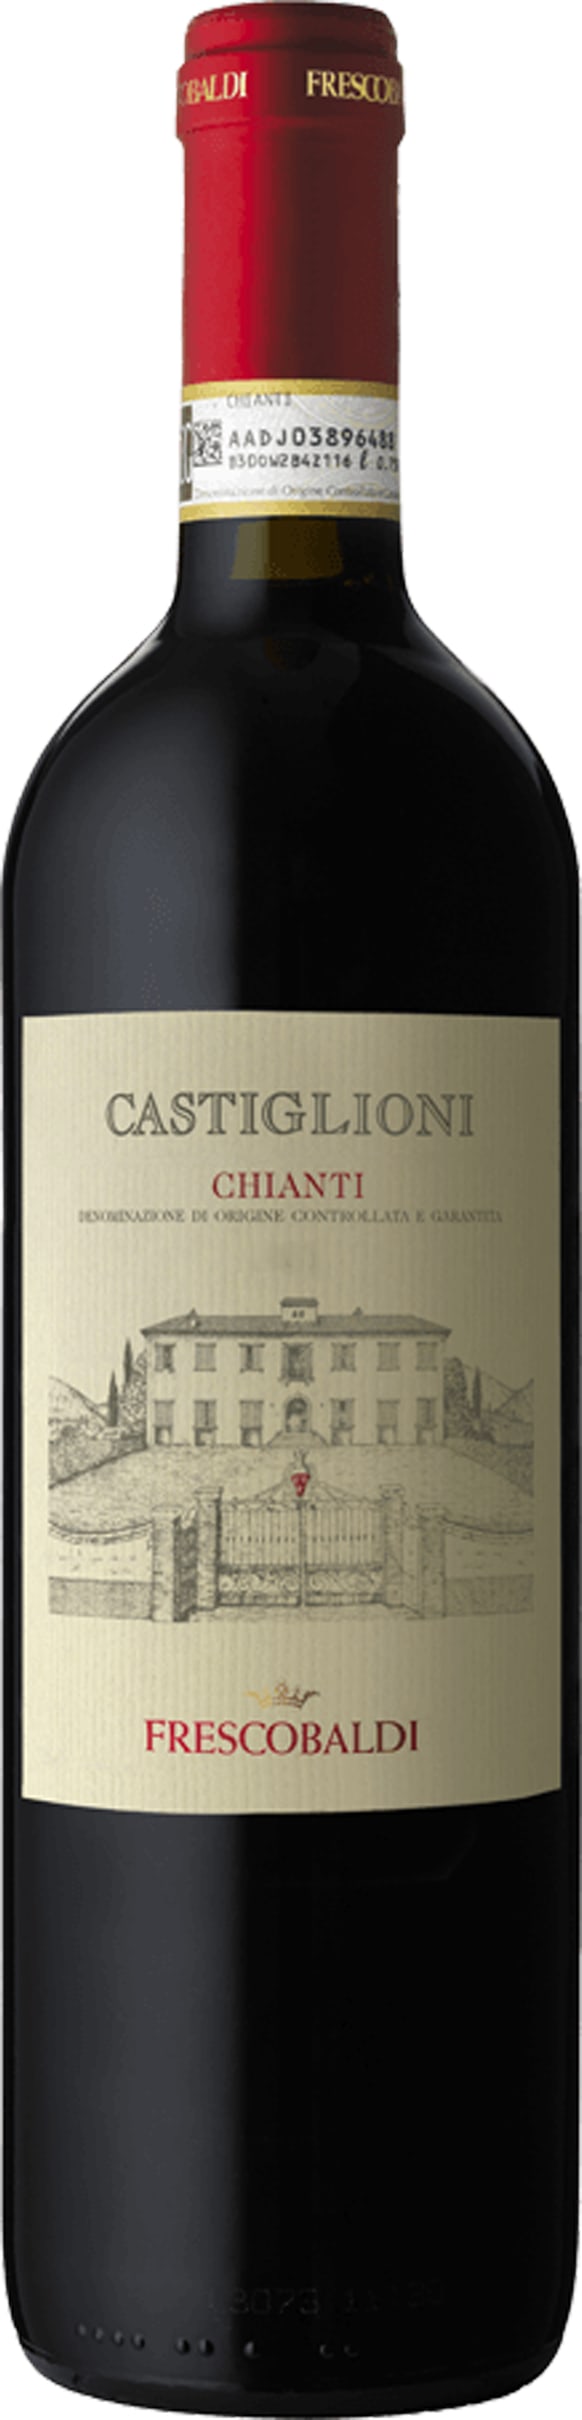 Frescobaldi Castiglioni Chianti, 375cl bottle 2019 37.5cl - Buy Frescobaldi Wines from GREAT WINES DIRECT wine shop